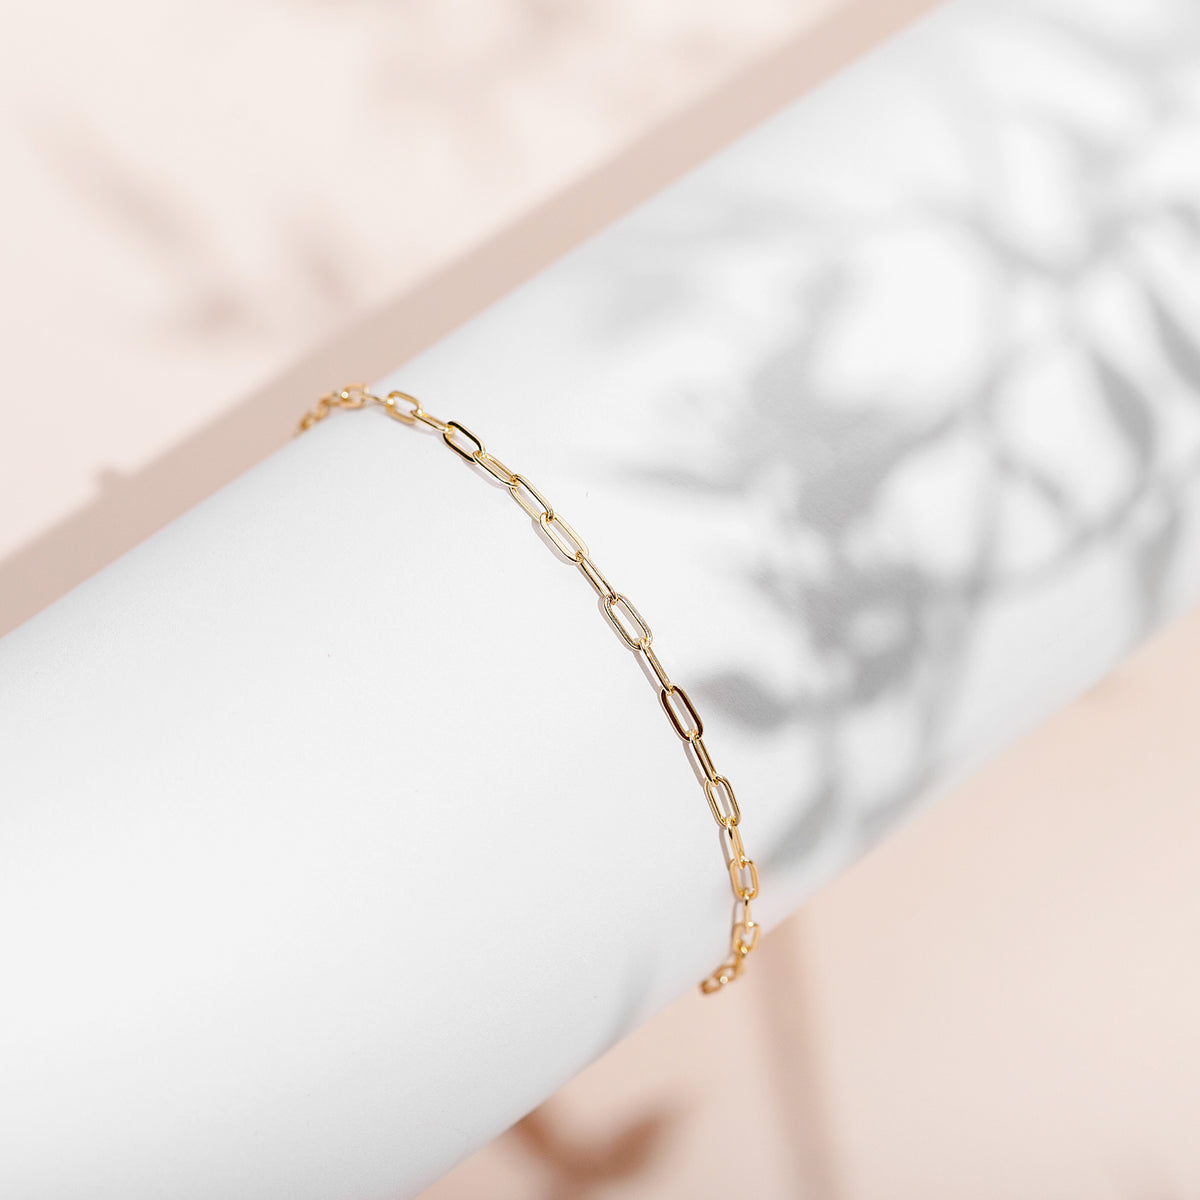 Tacori Pav√© Monogram Chain Bracelet SB196S